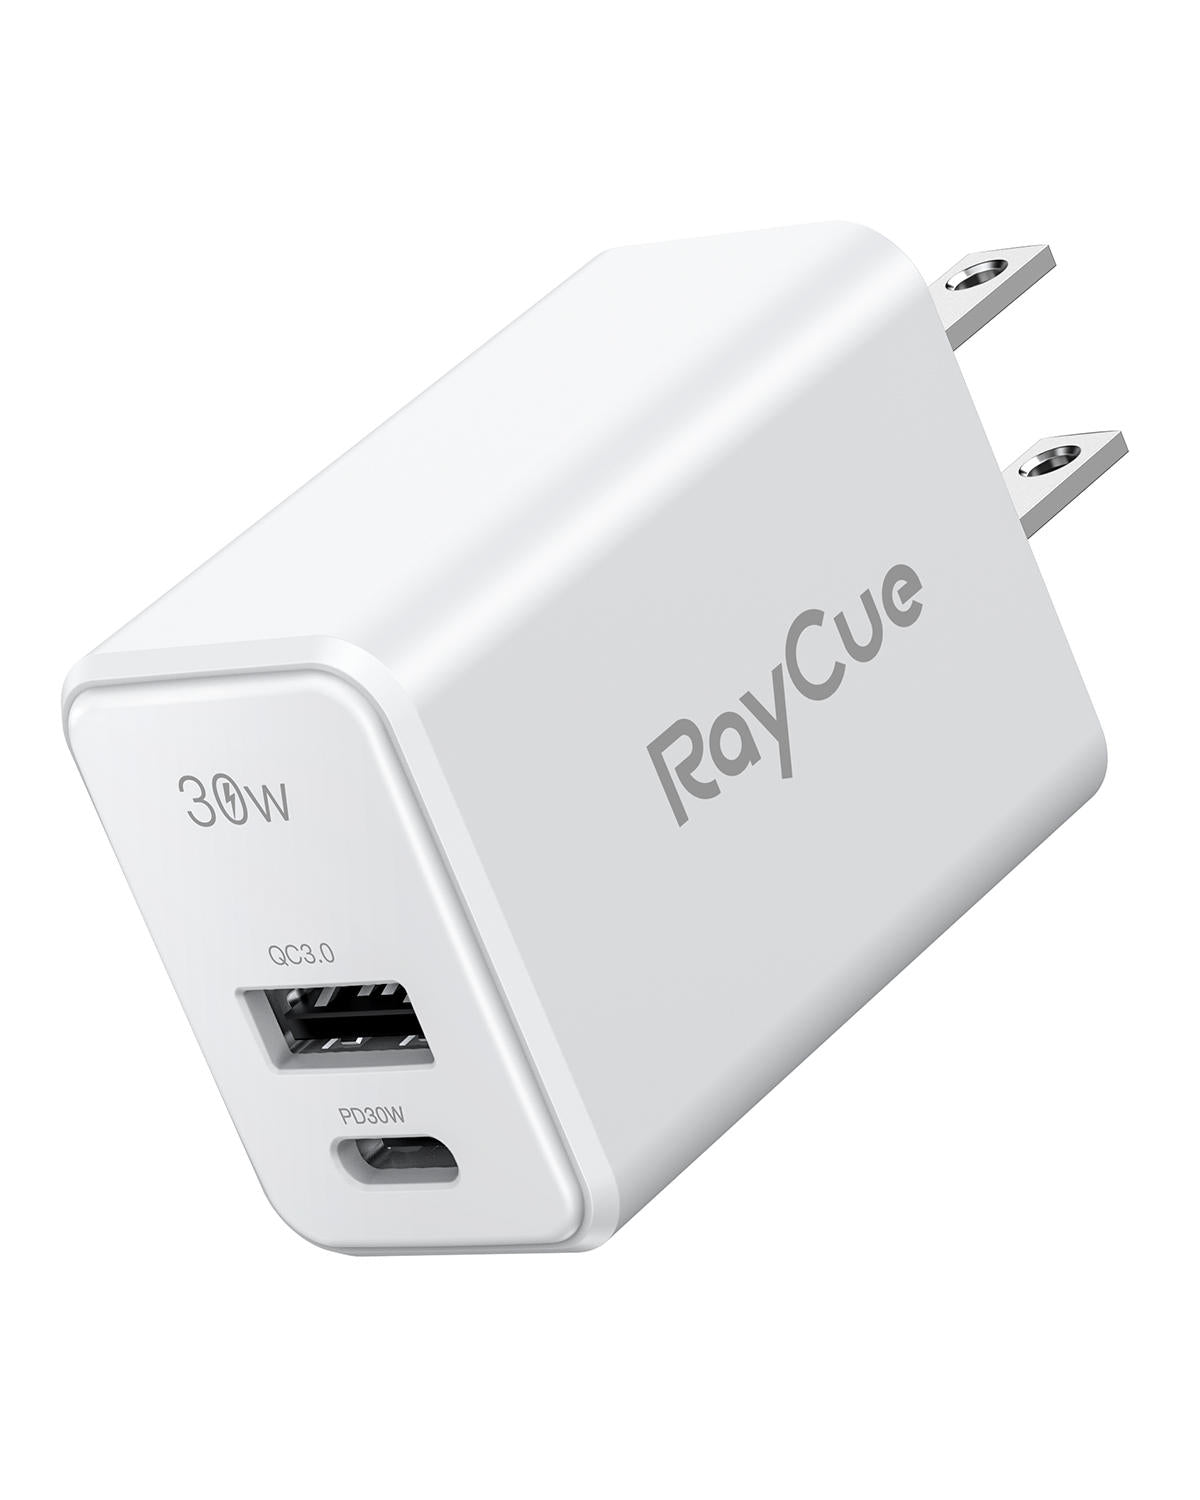 RayCue BlitzCharge Posh 30W 2-Port USB Fast Charger for MacBook, iPhone, iPad -US Plug